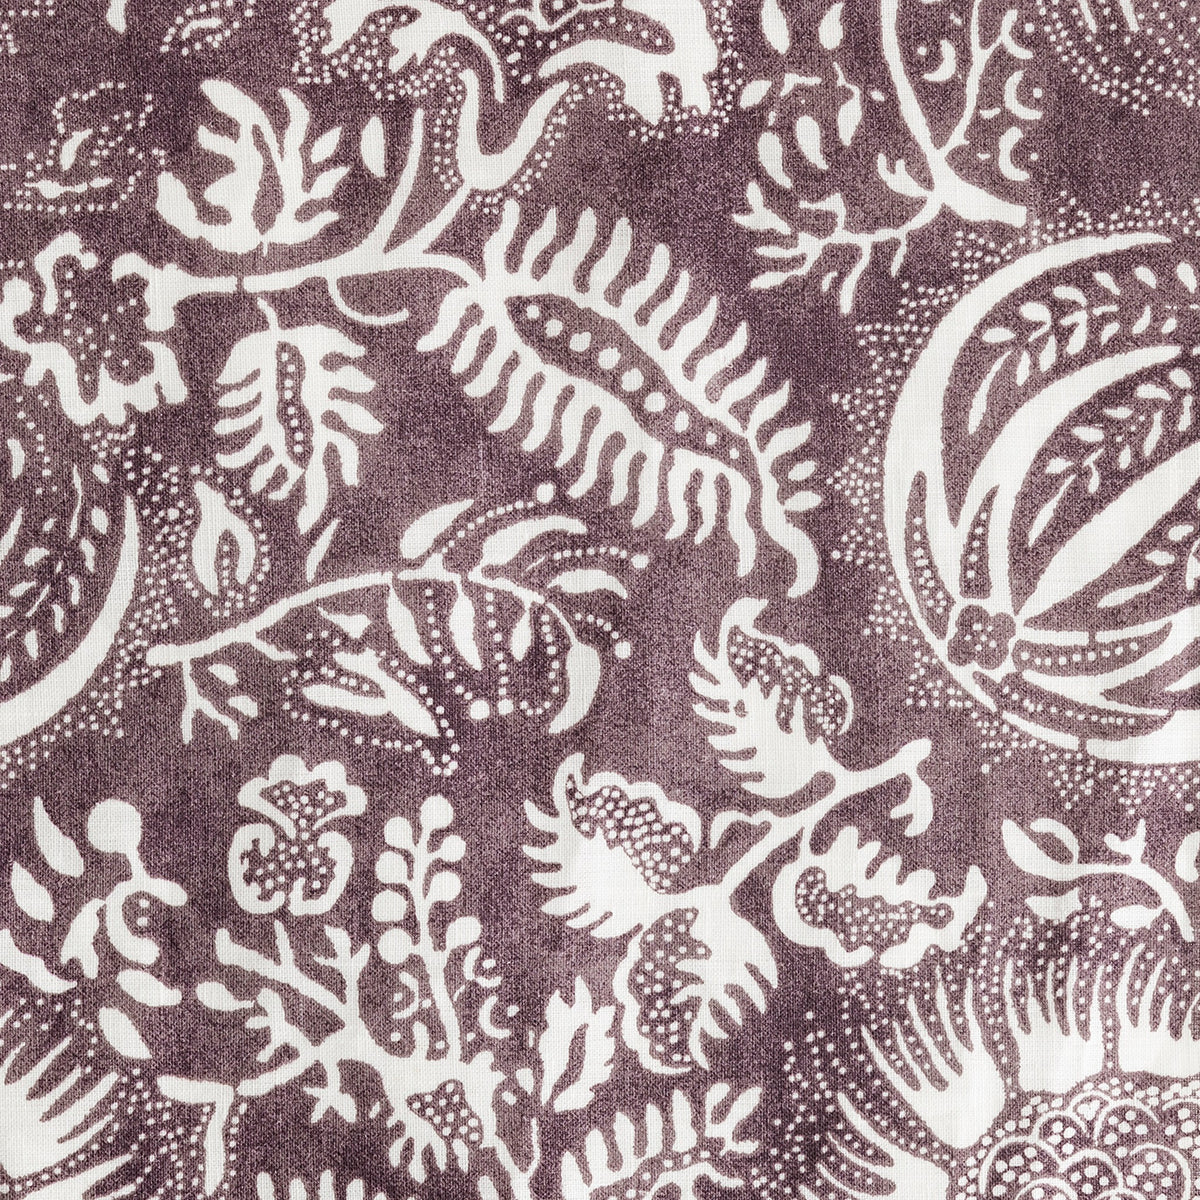 Swatch Sample of Matouk Granada Linen Tissue Box Cover in Thistle Color